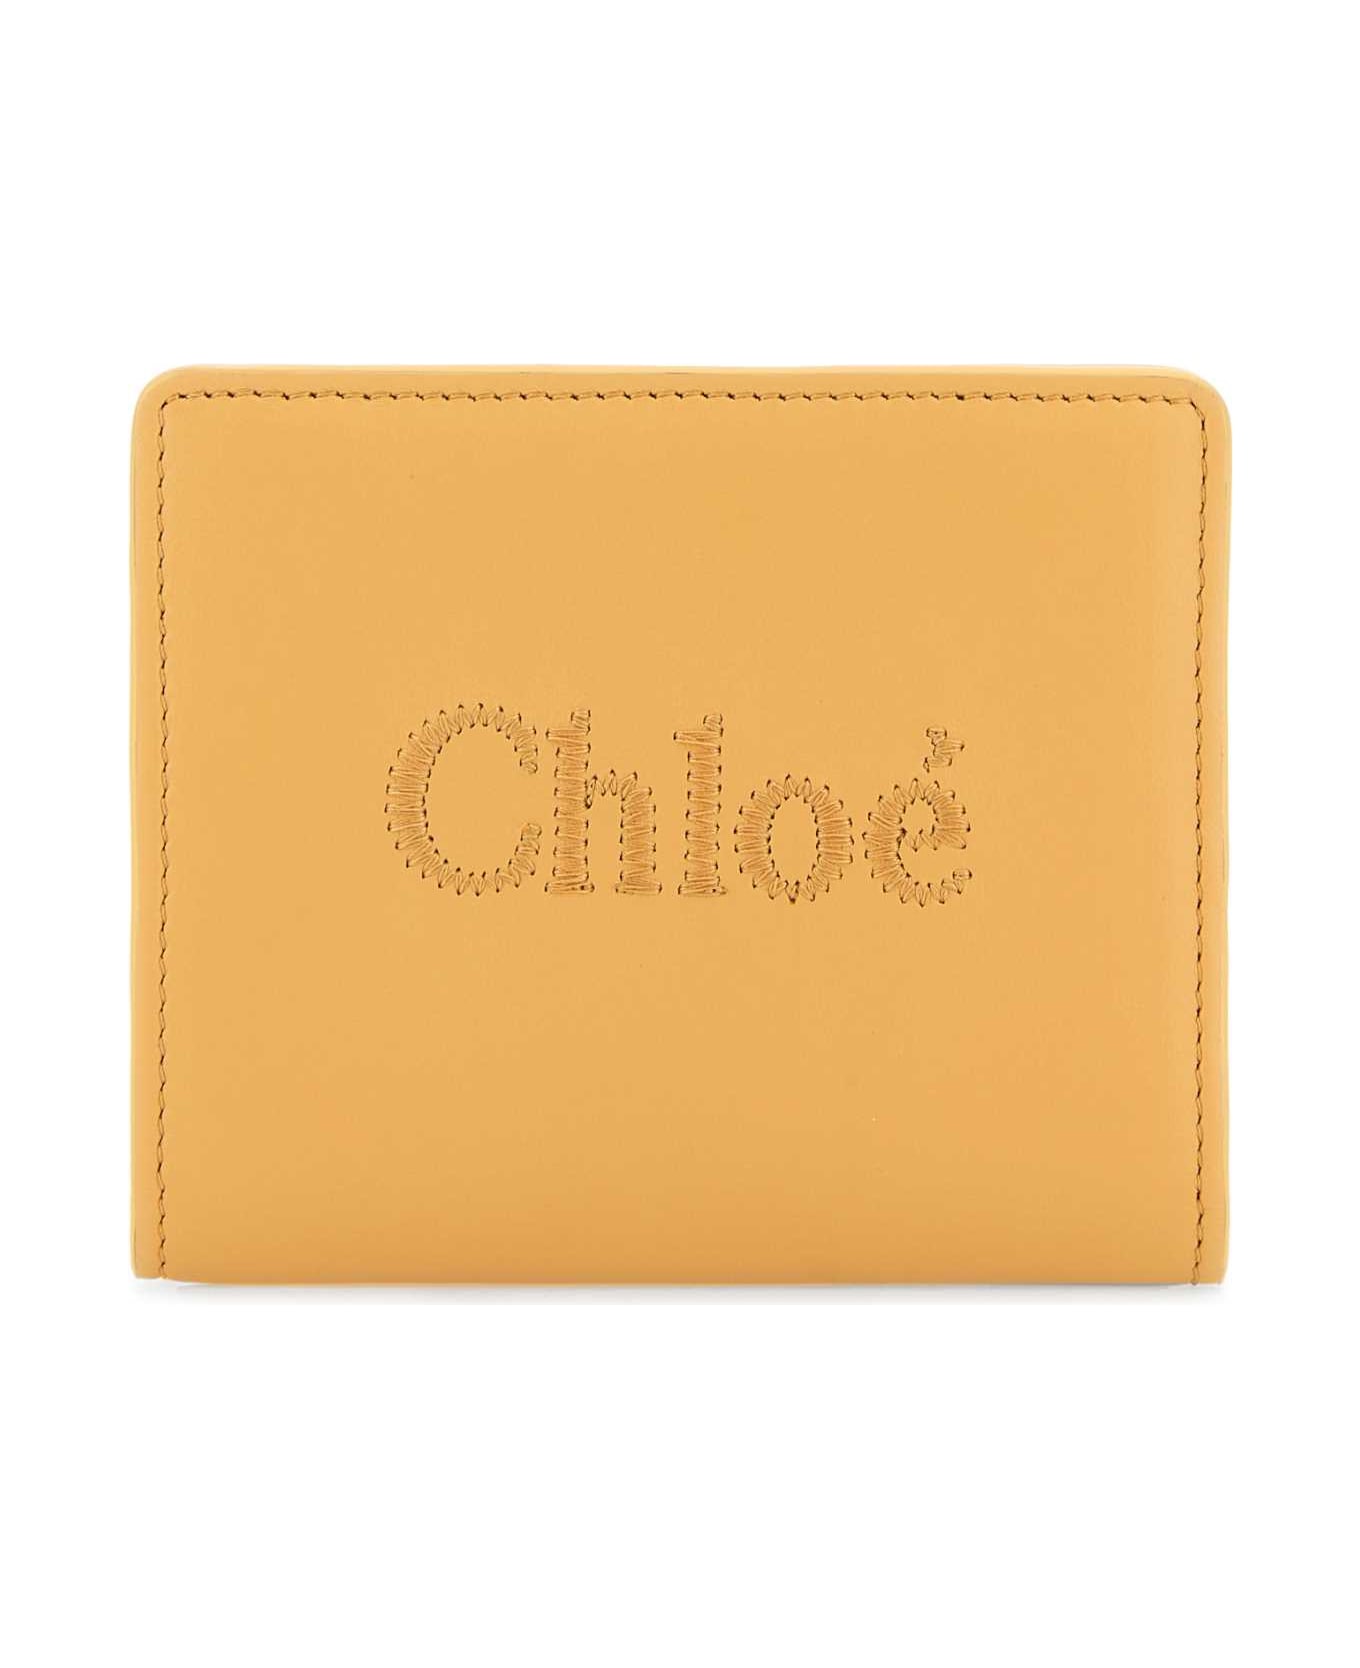 Chloé Peach Leather Wallet - HONEYGOLD 財布